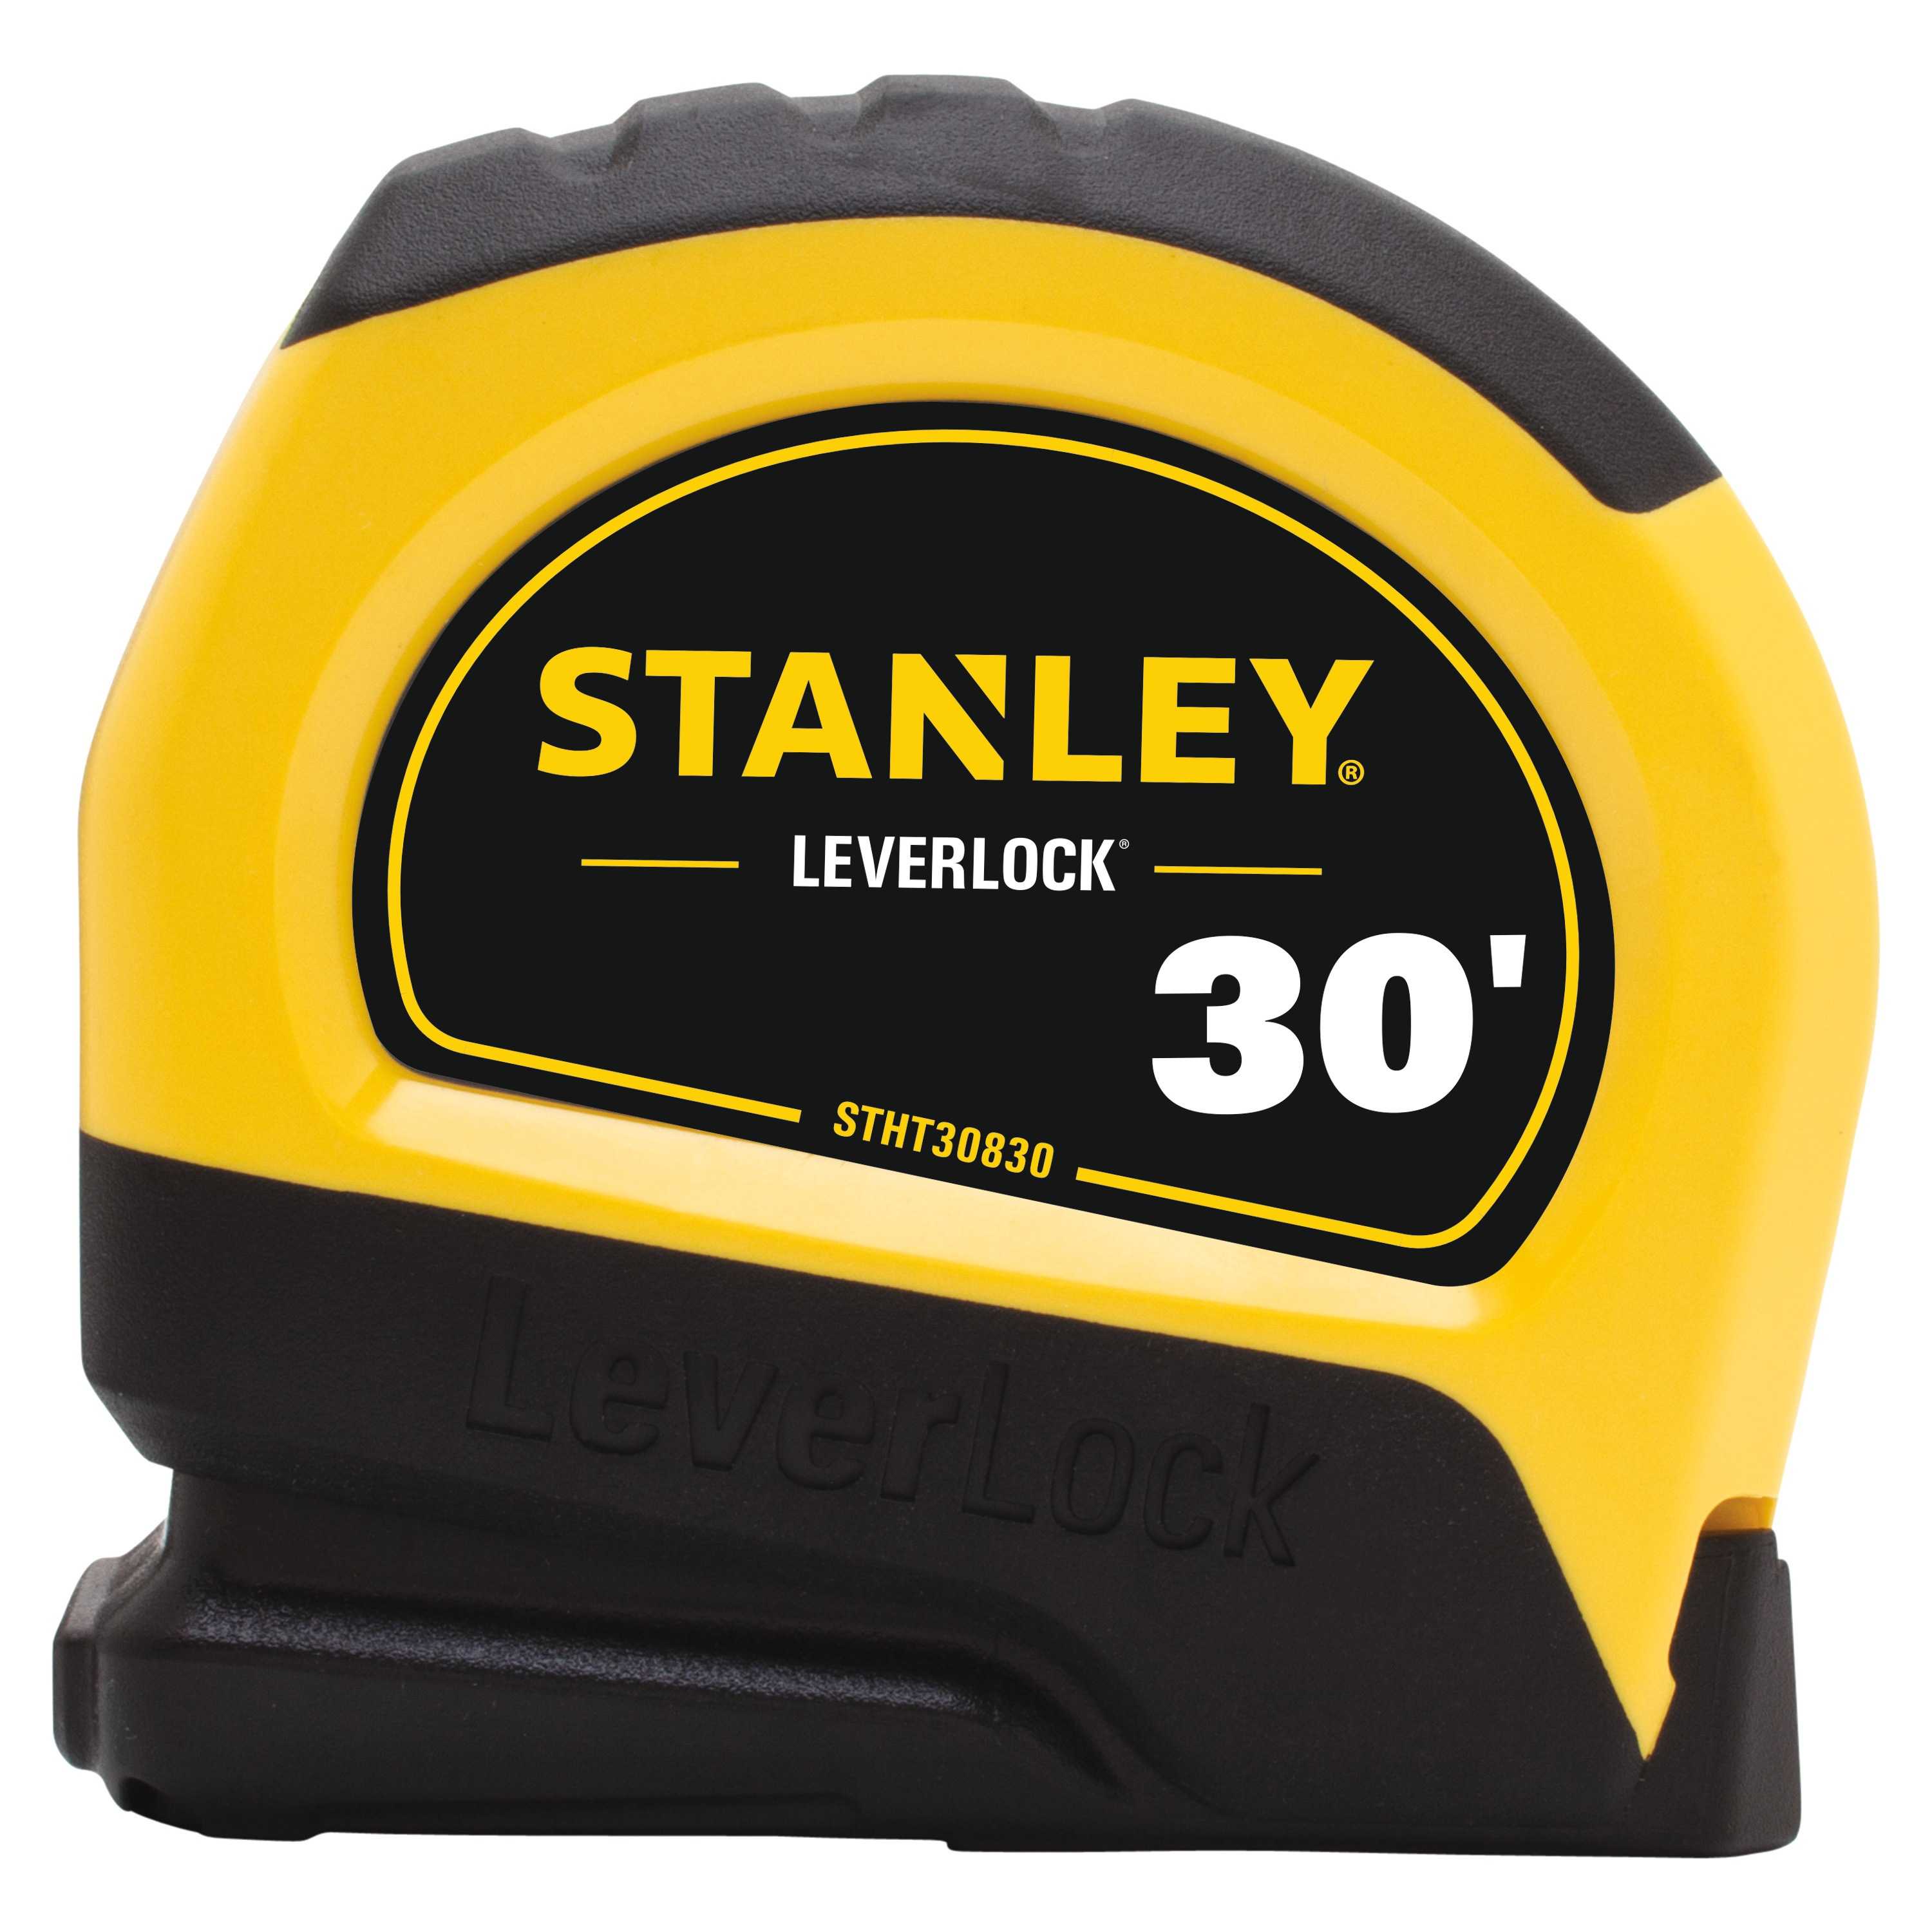 Stanley Tools - 30 ft LEVERLOCK Tape Measure - STHT30830